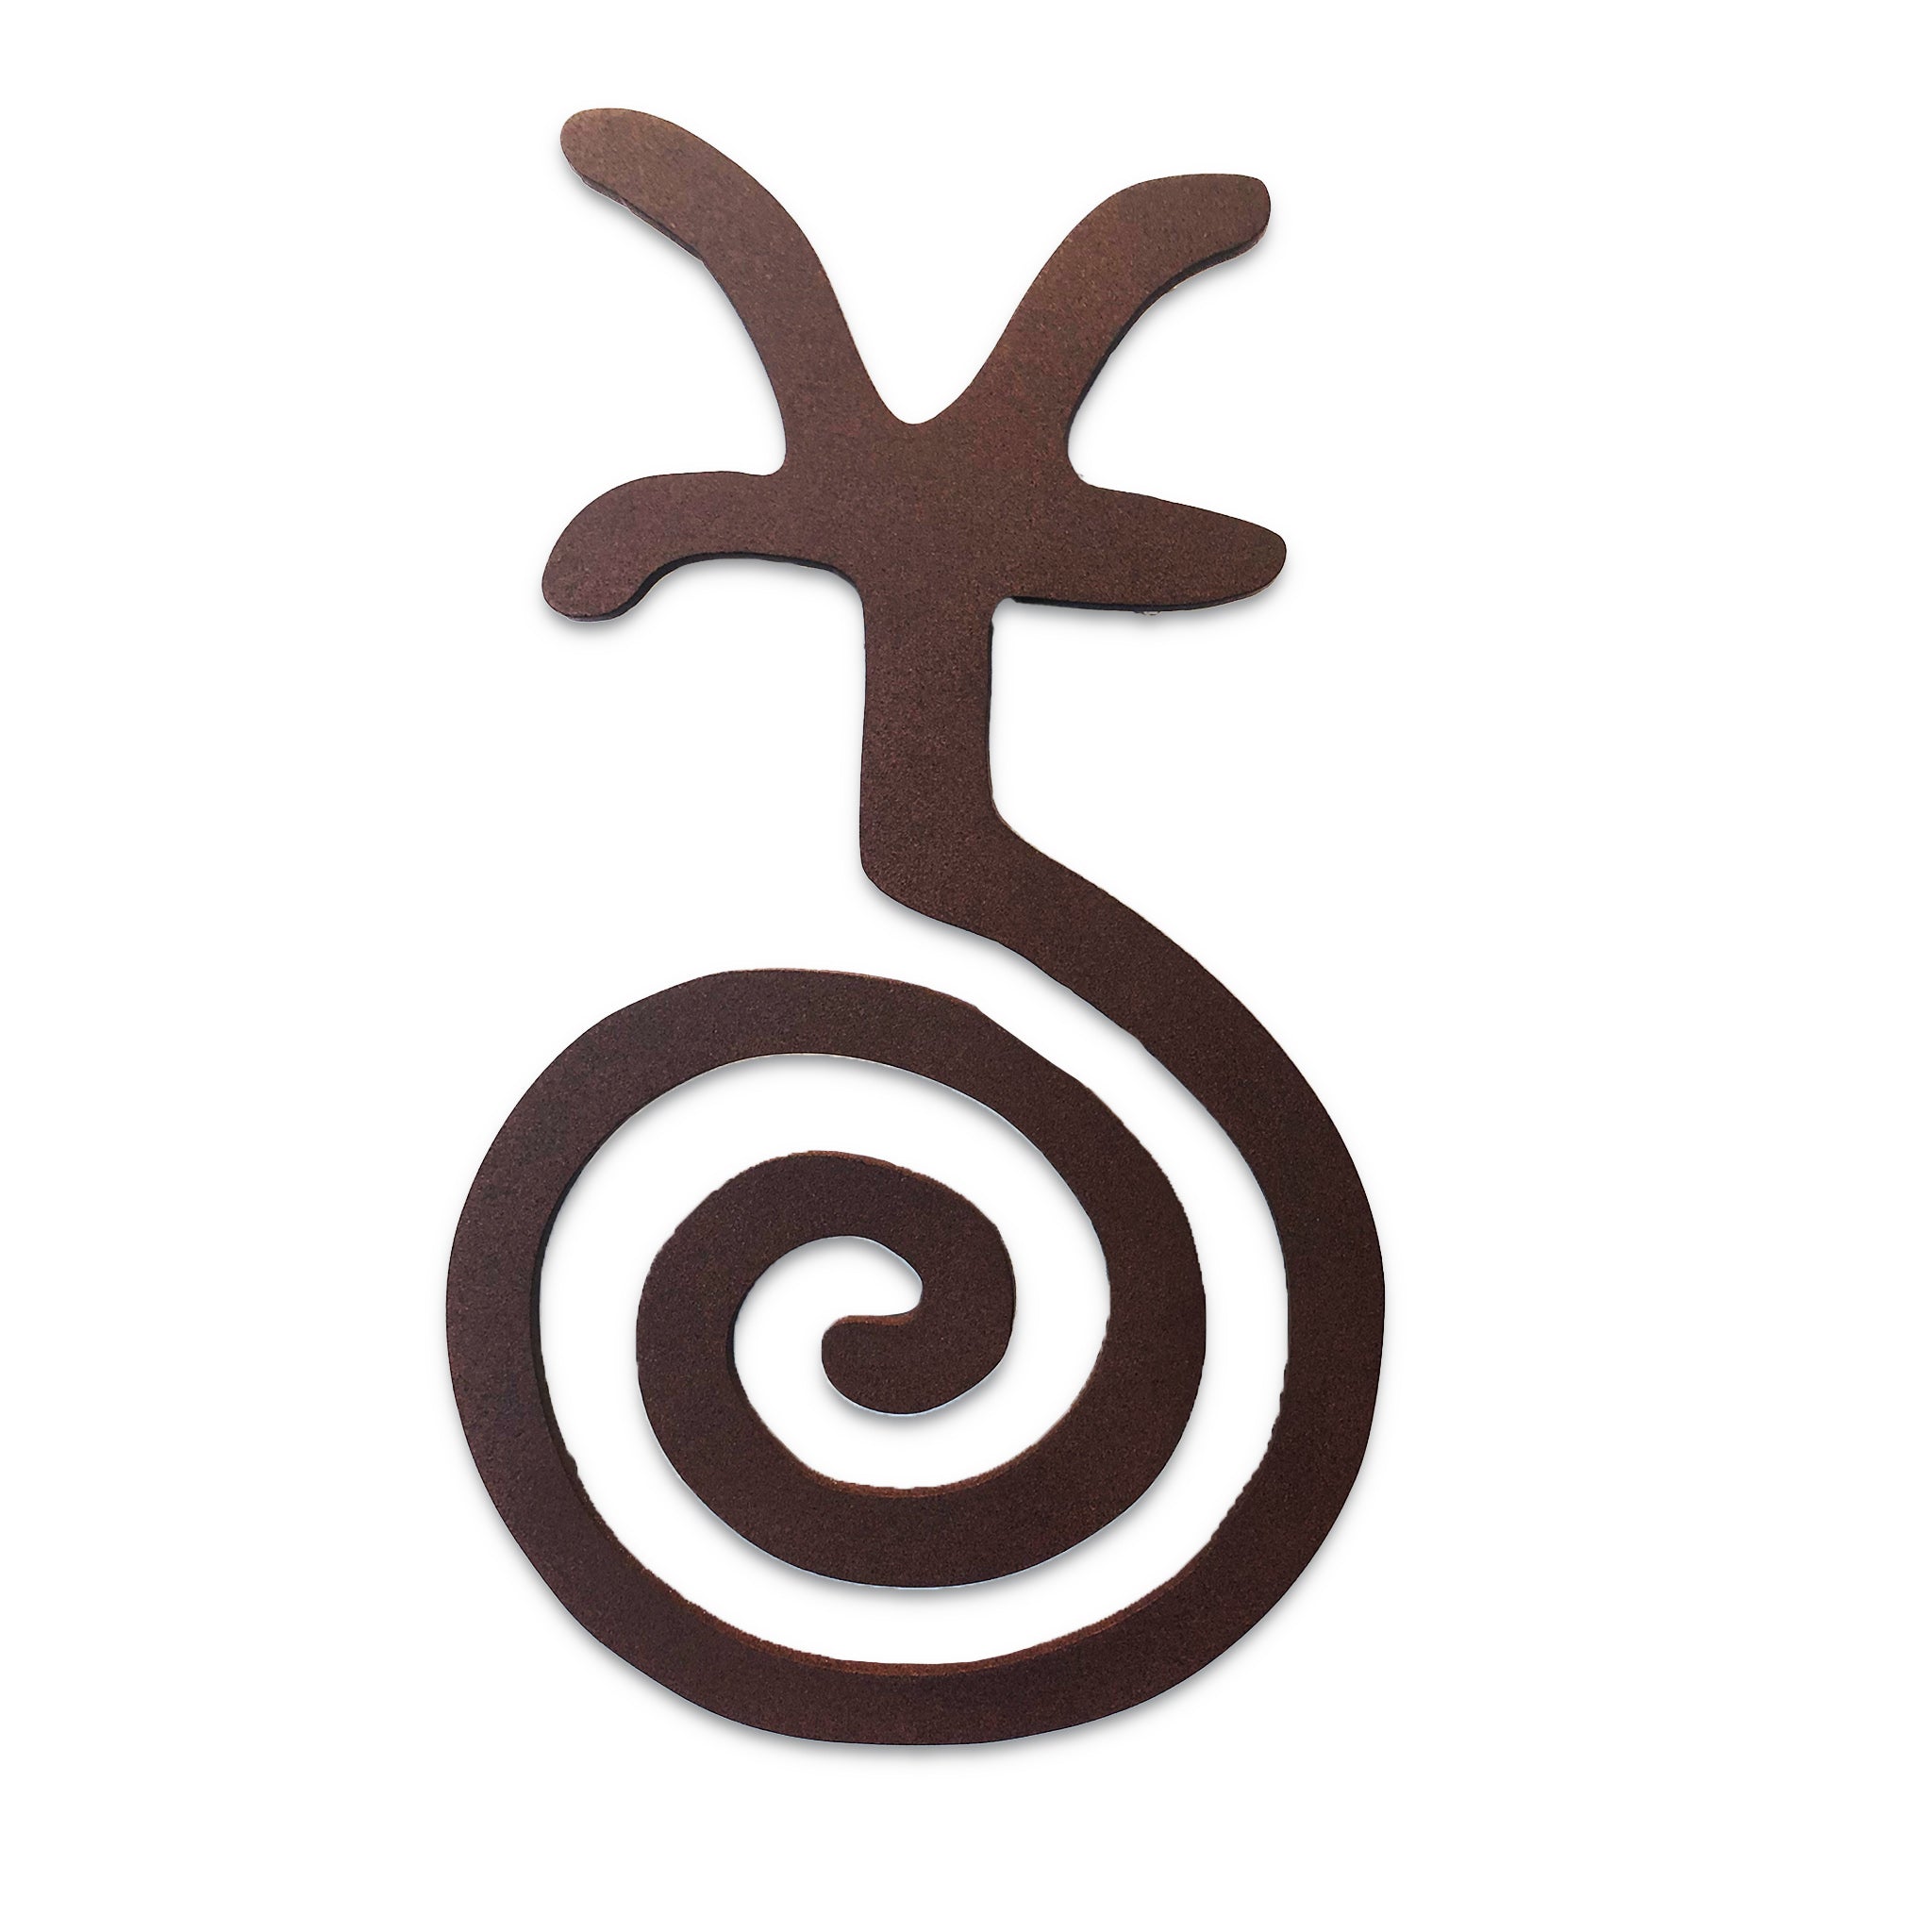 rhea symbol greek mythology